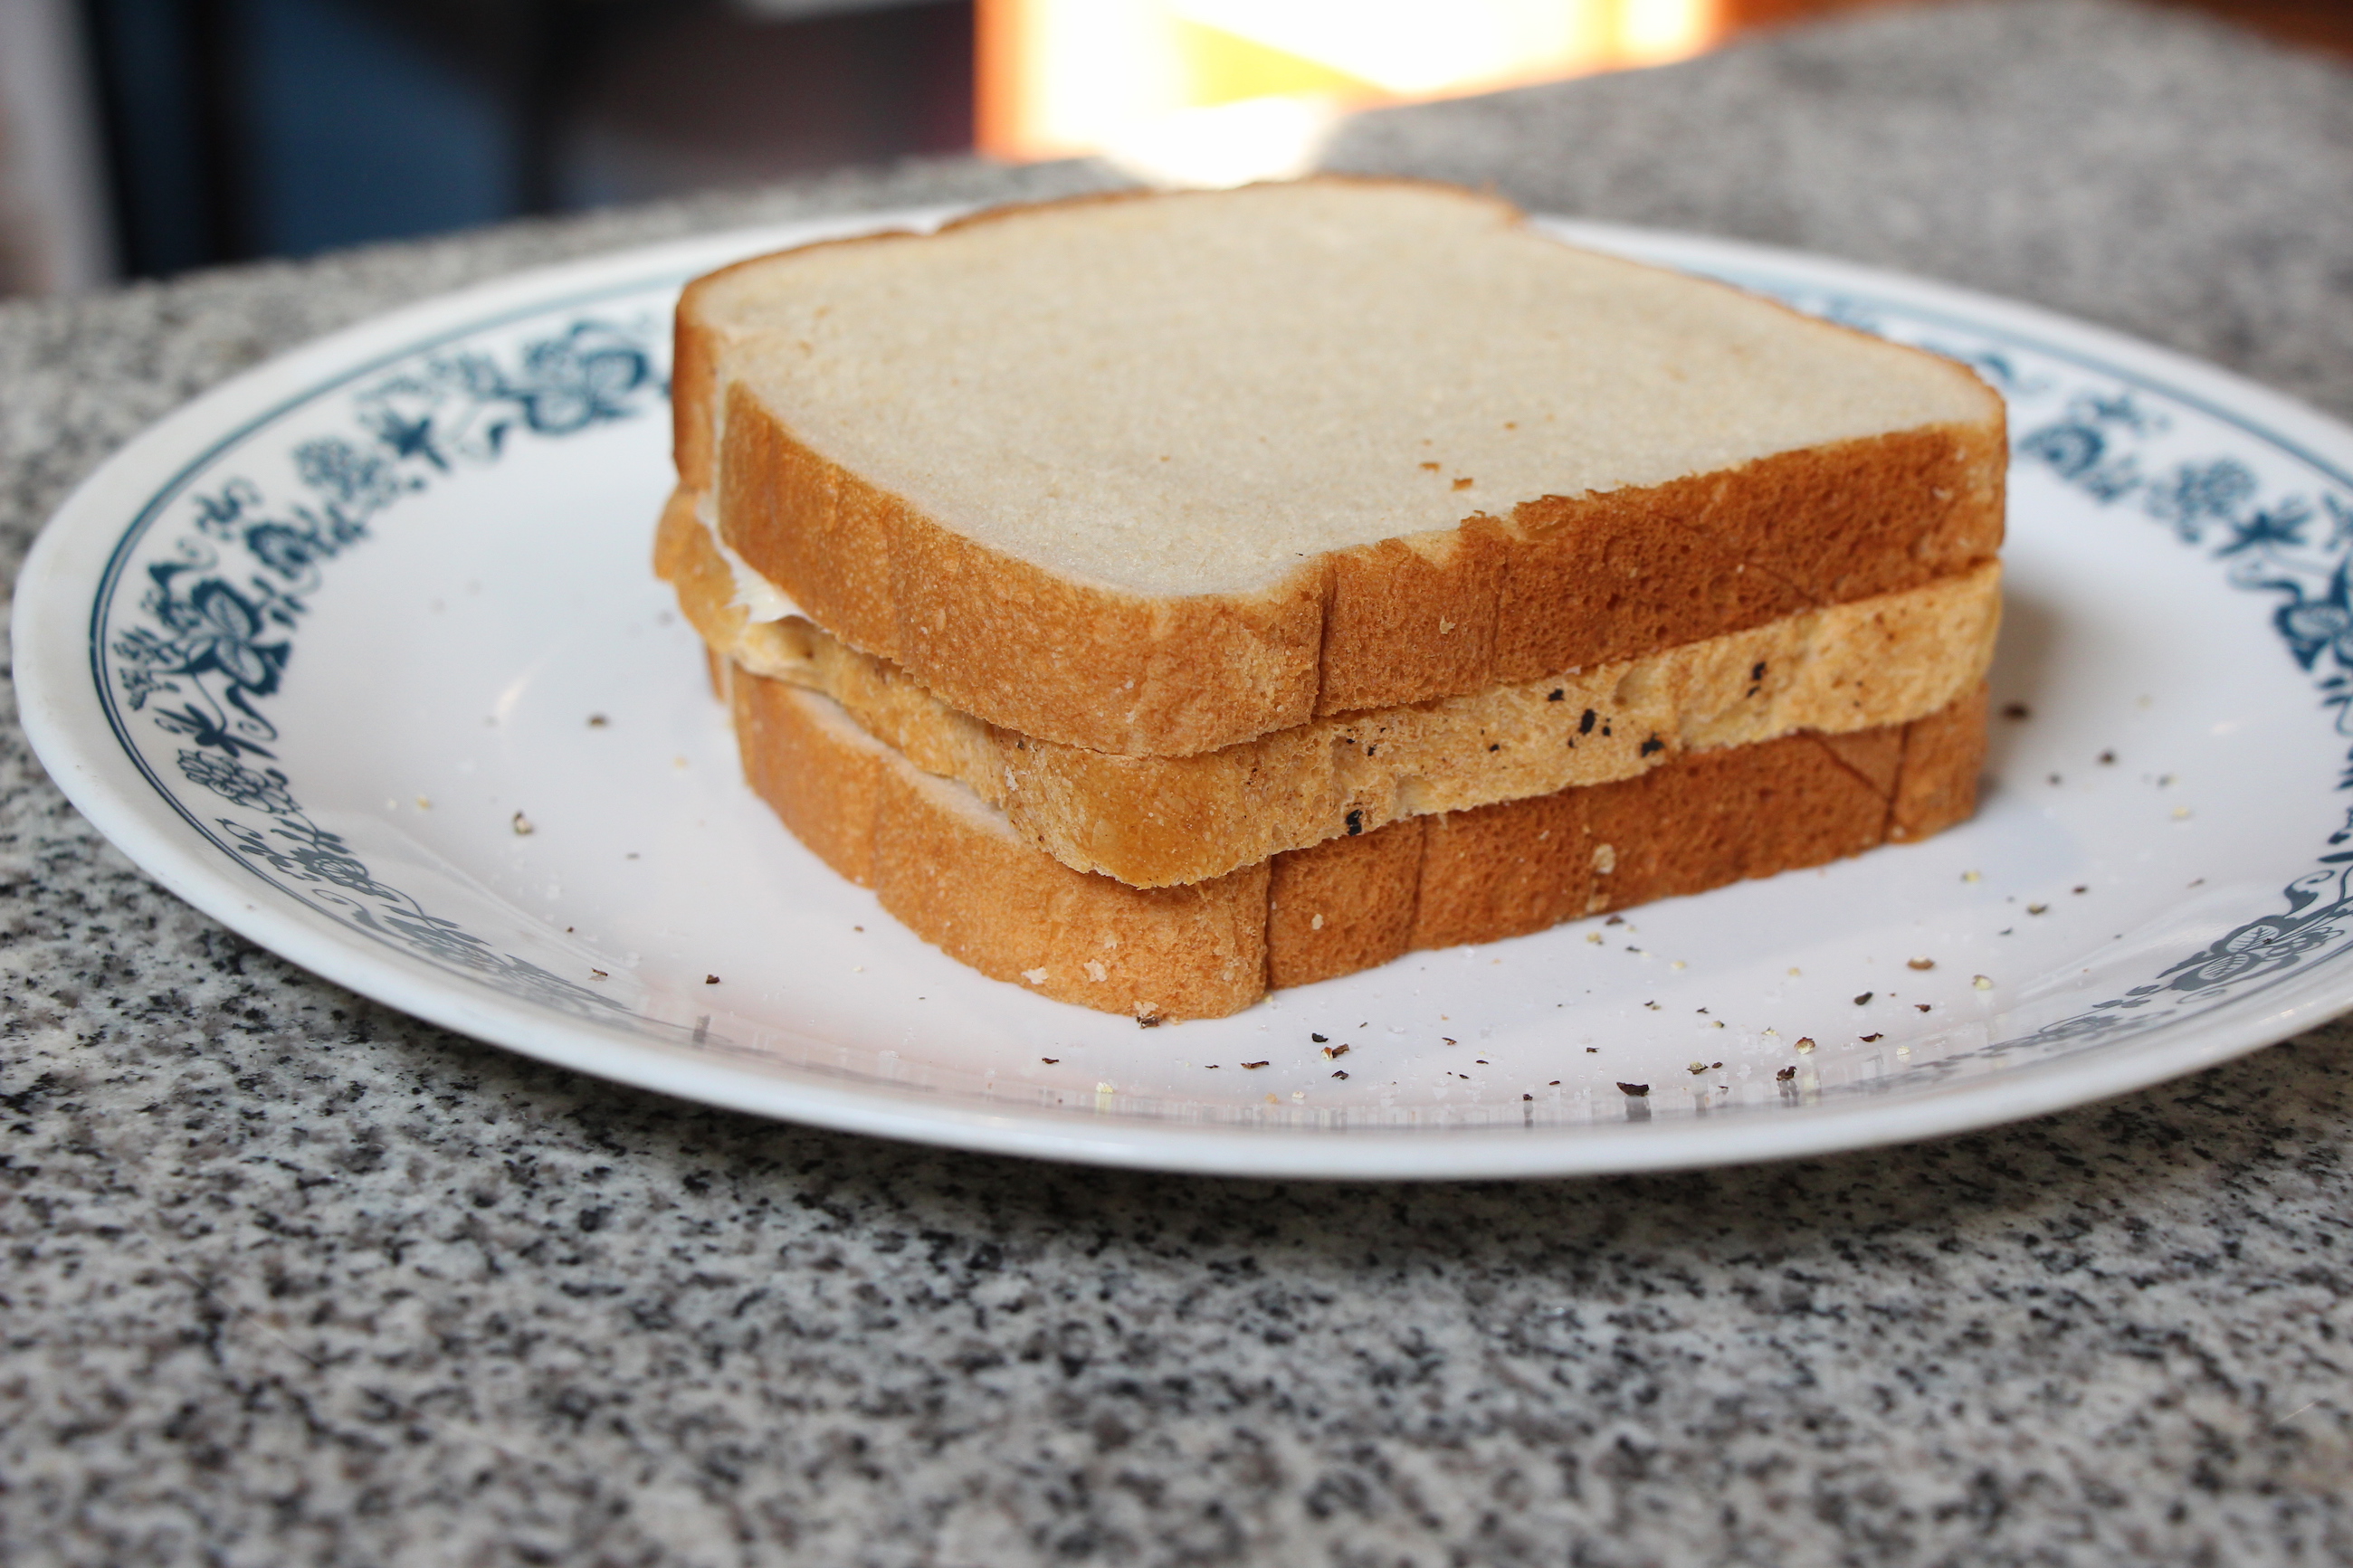 Toast sandwich